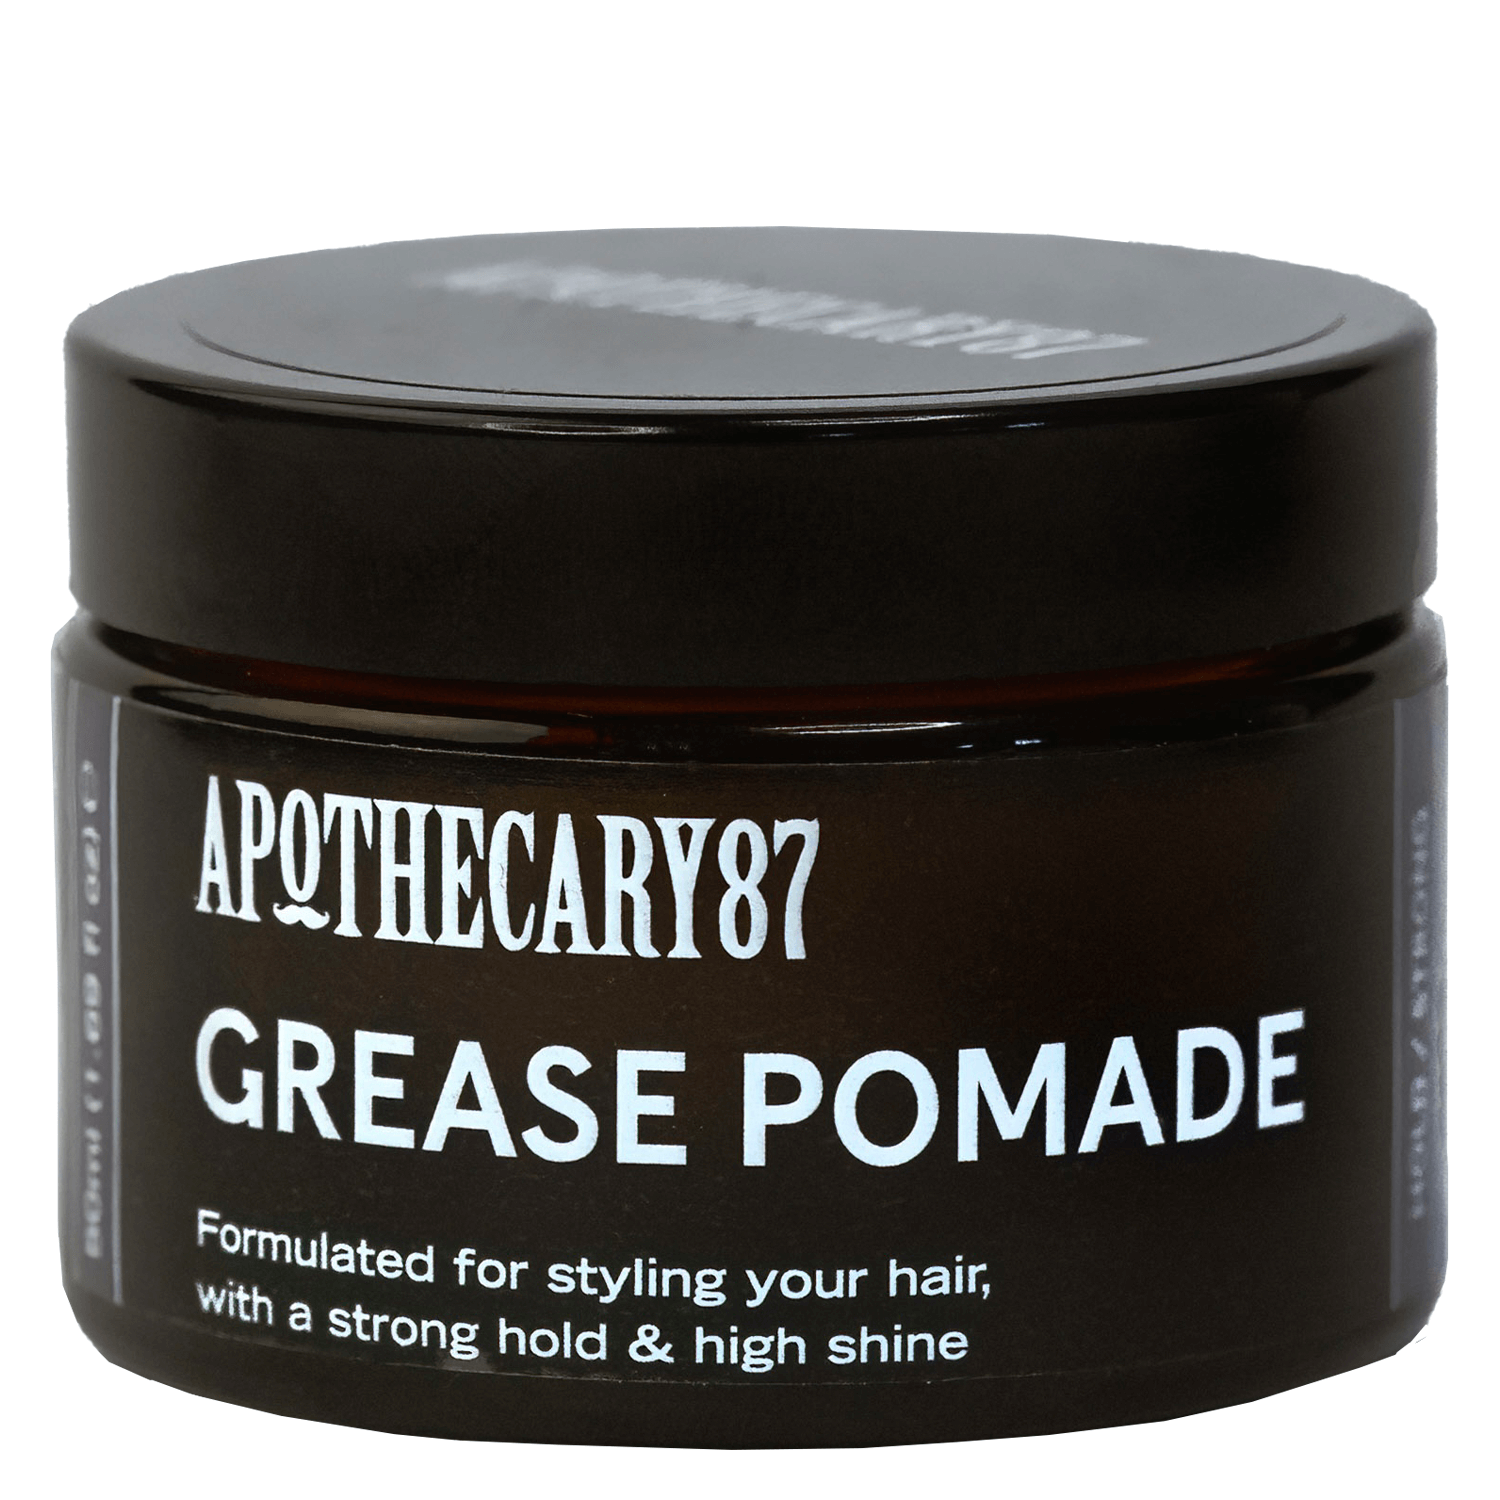 Image du produit de Apothecary87 Grooming - Grease Pomade